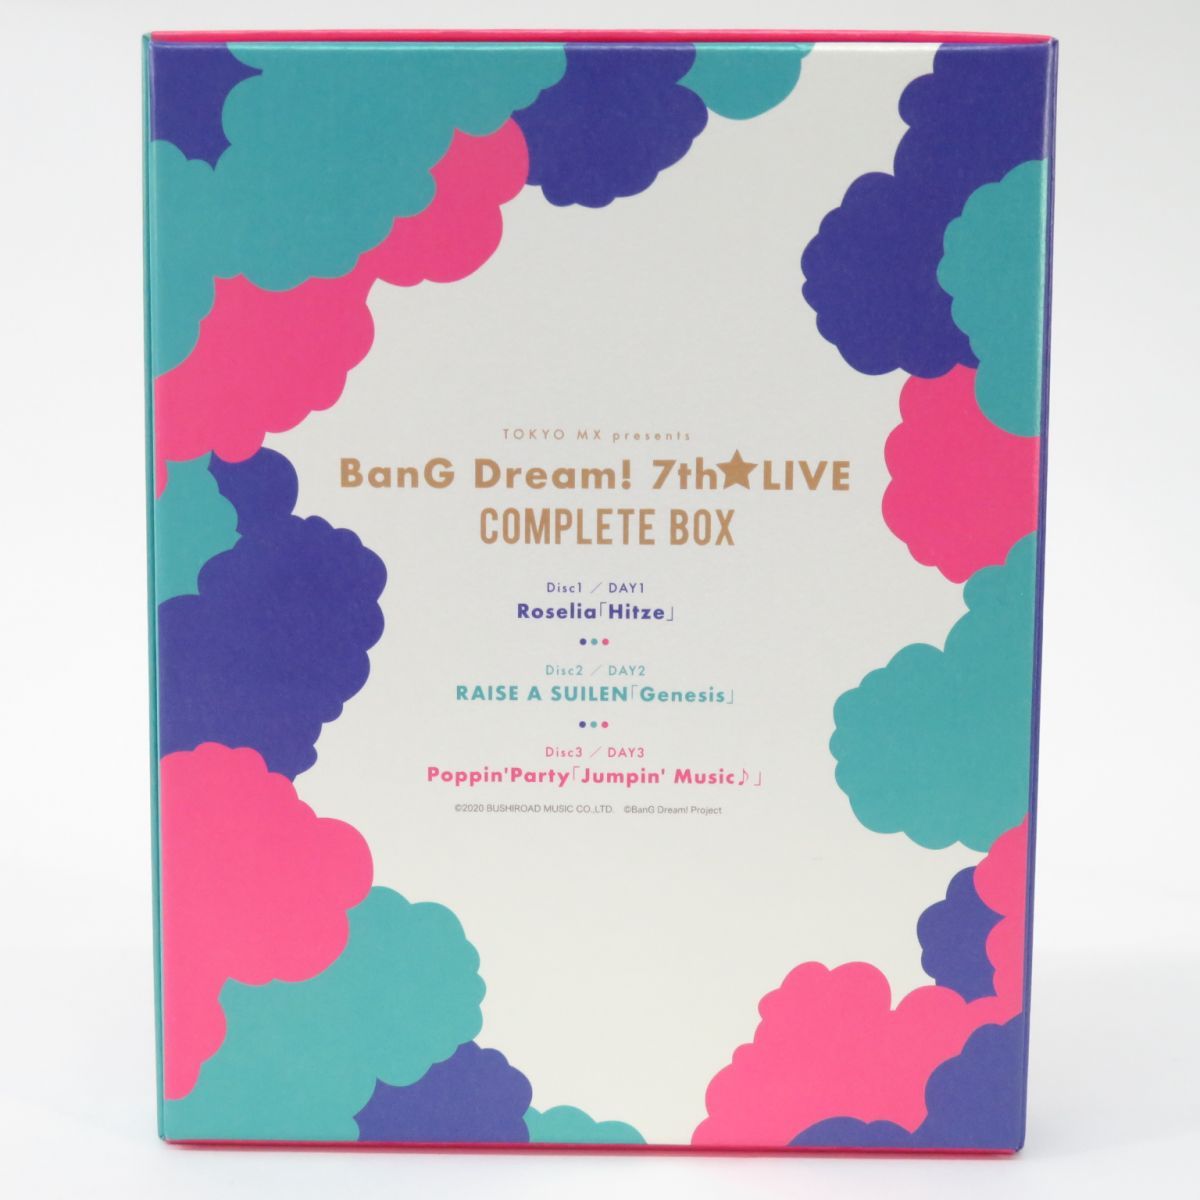 Blu-ray TOKYO MX presents BanG Dream! 7th☆LIVE COMPLETE BOX